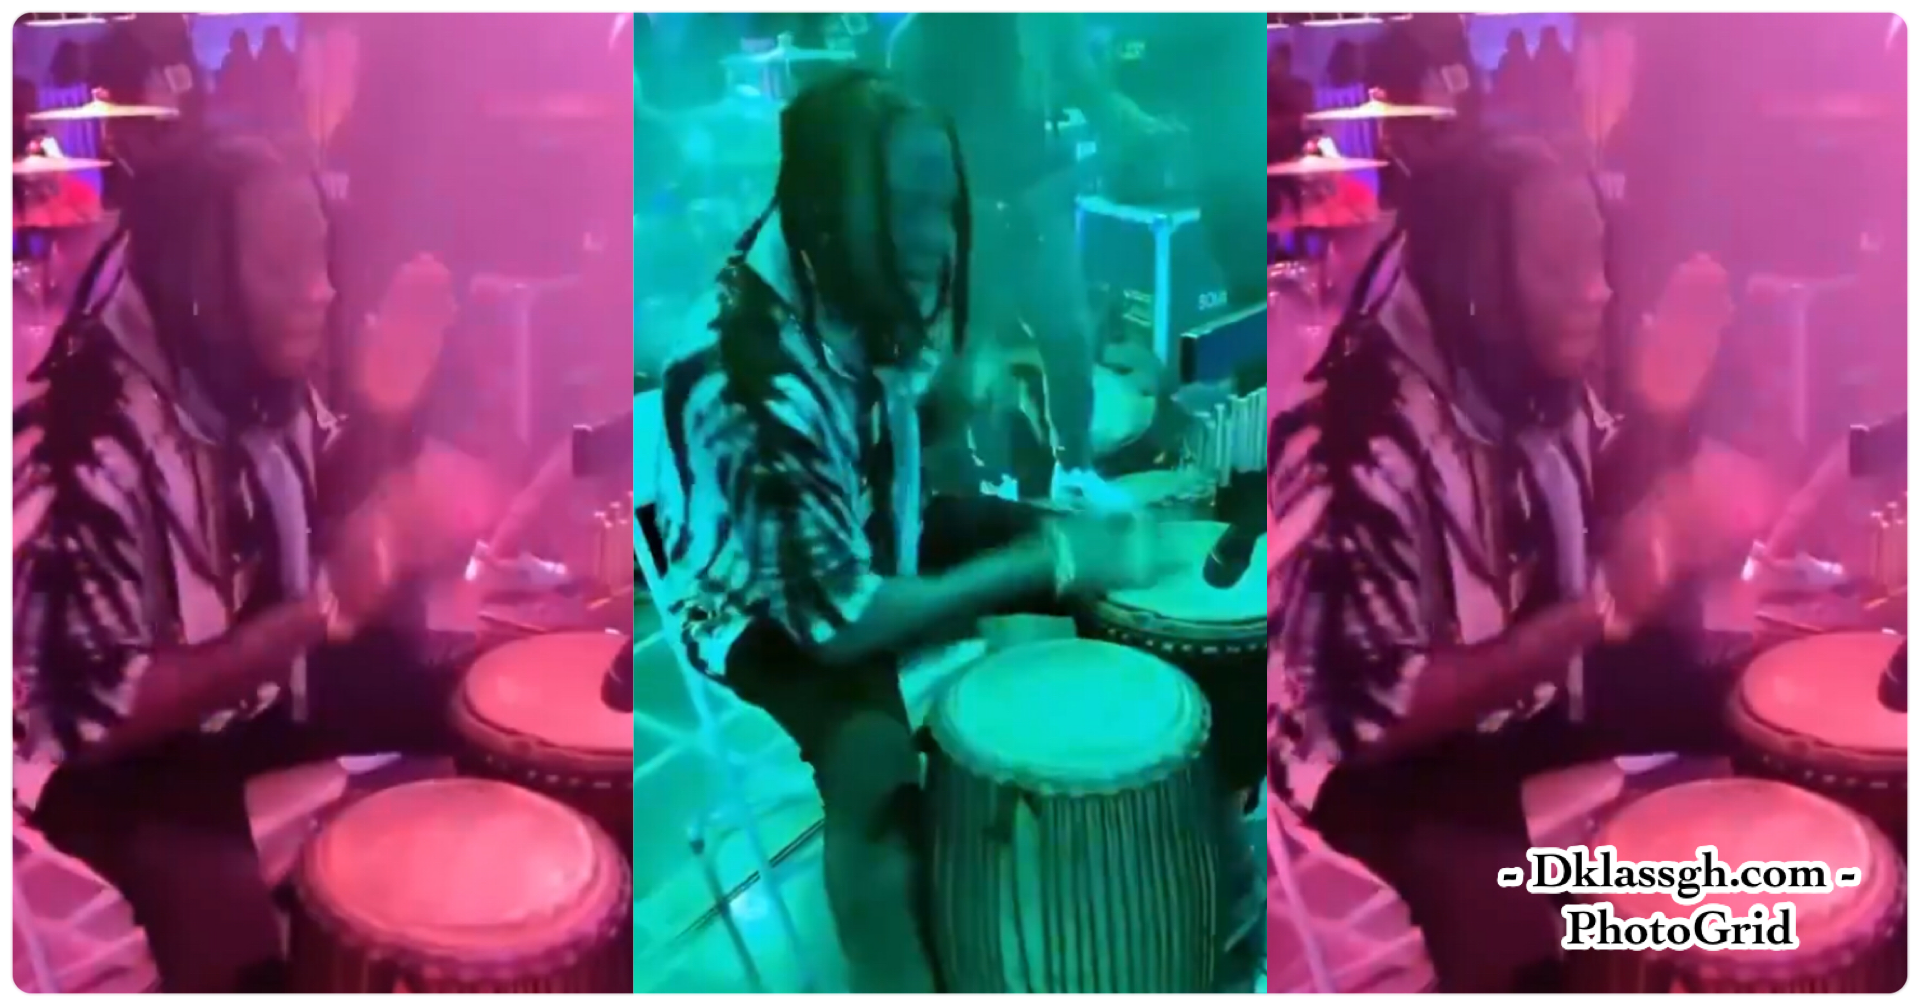 Stonebwoy Display His Drumming Skills